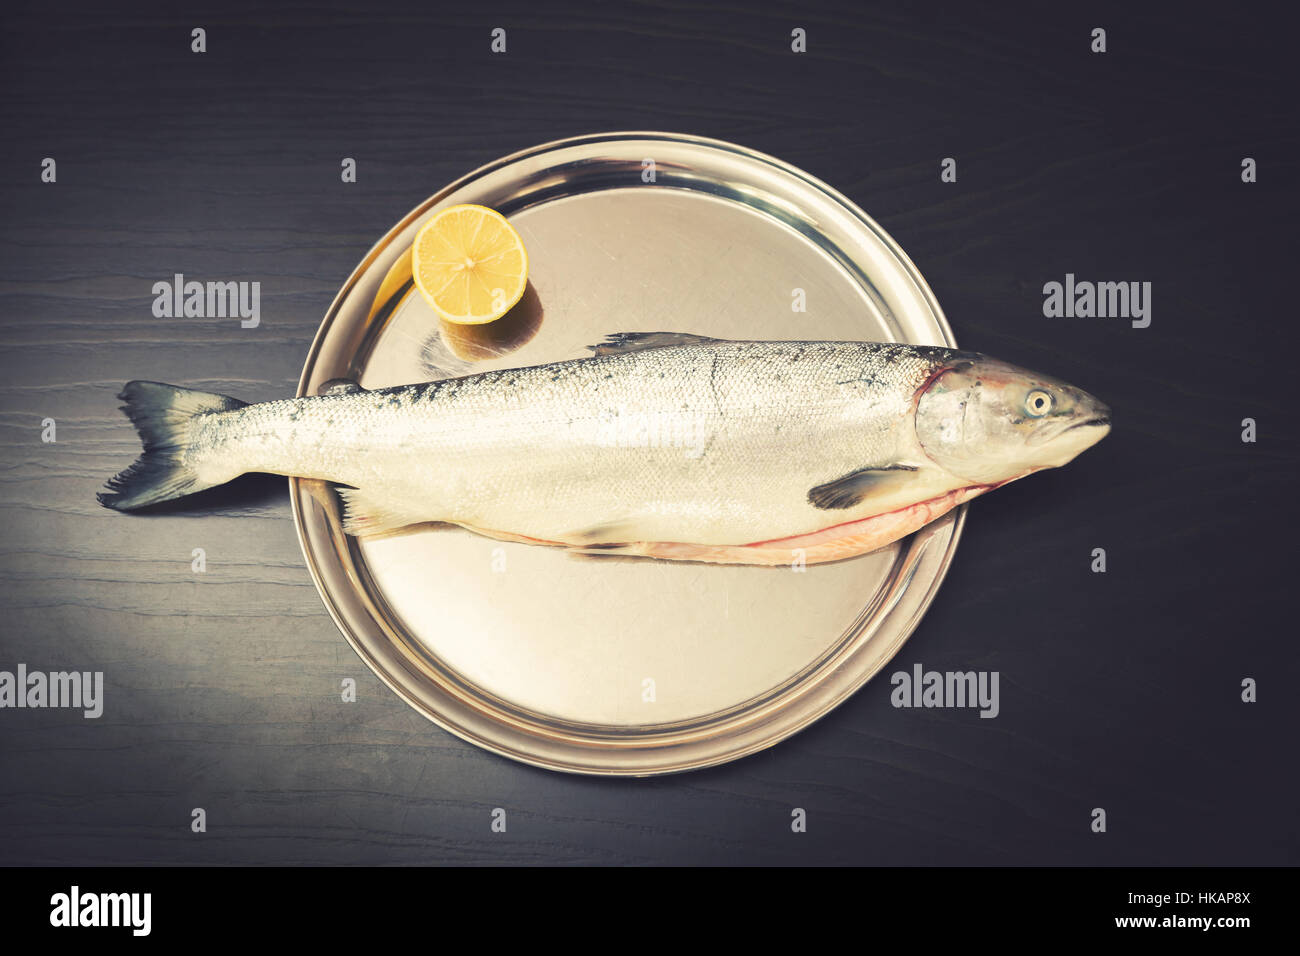 Salmon fish with lemon on metal tray Stock Photo